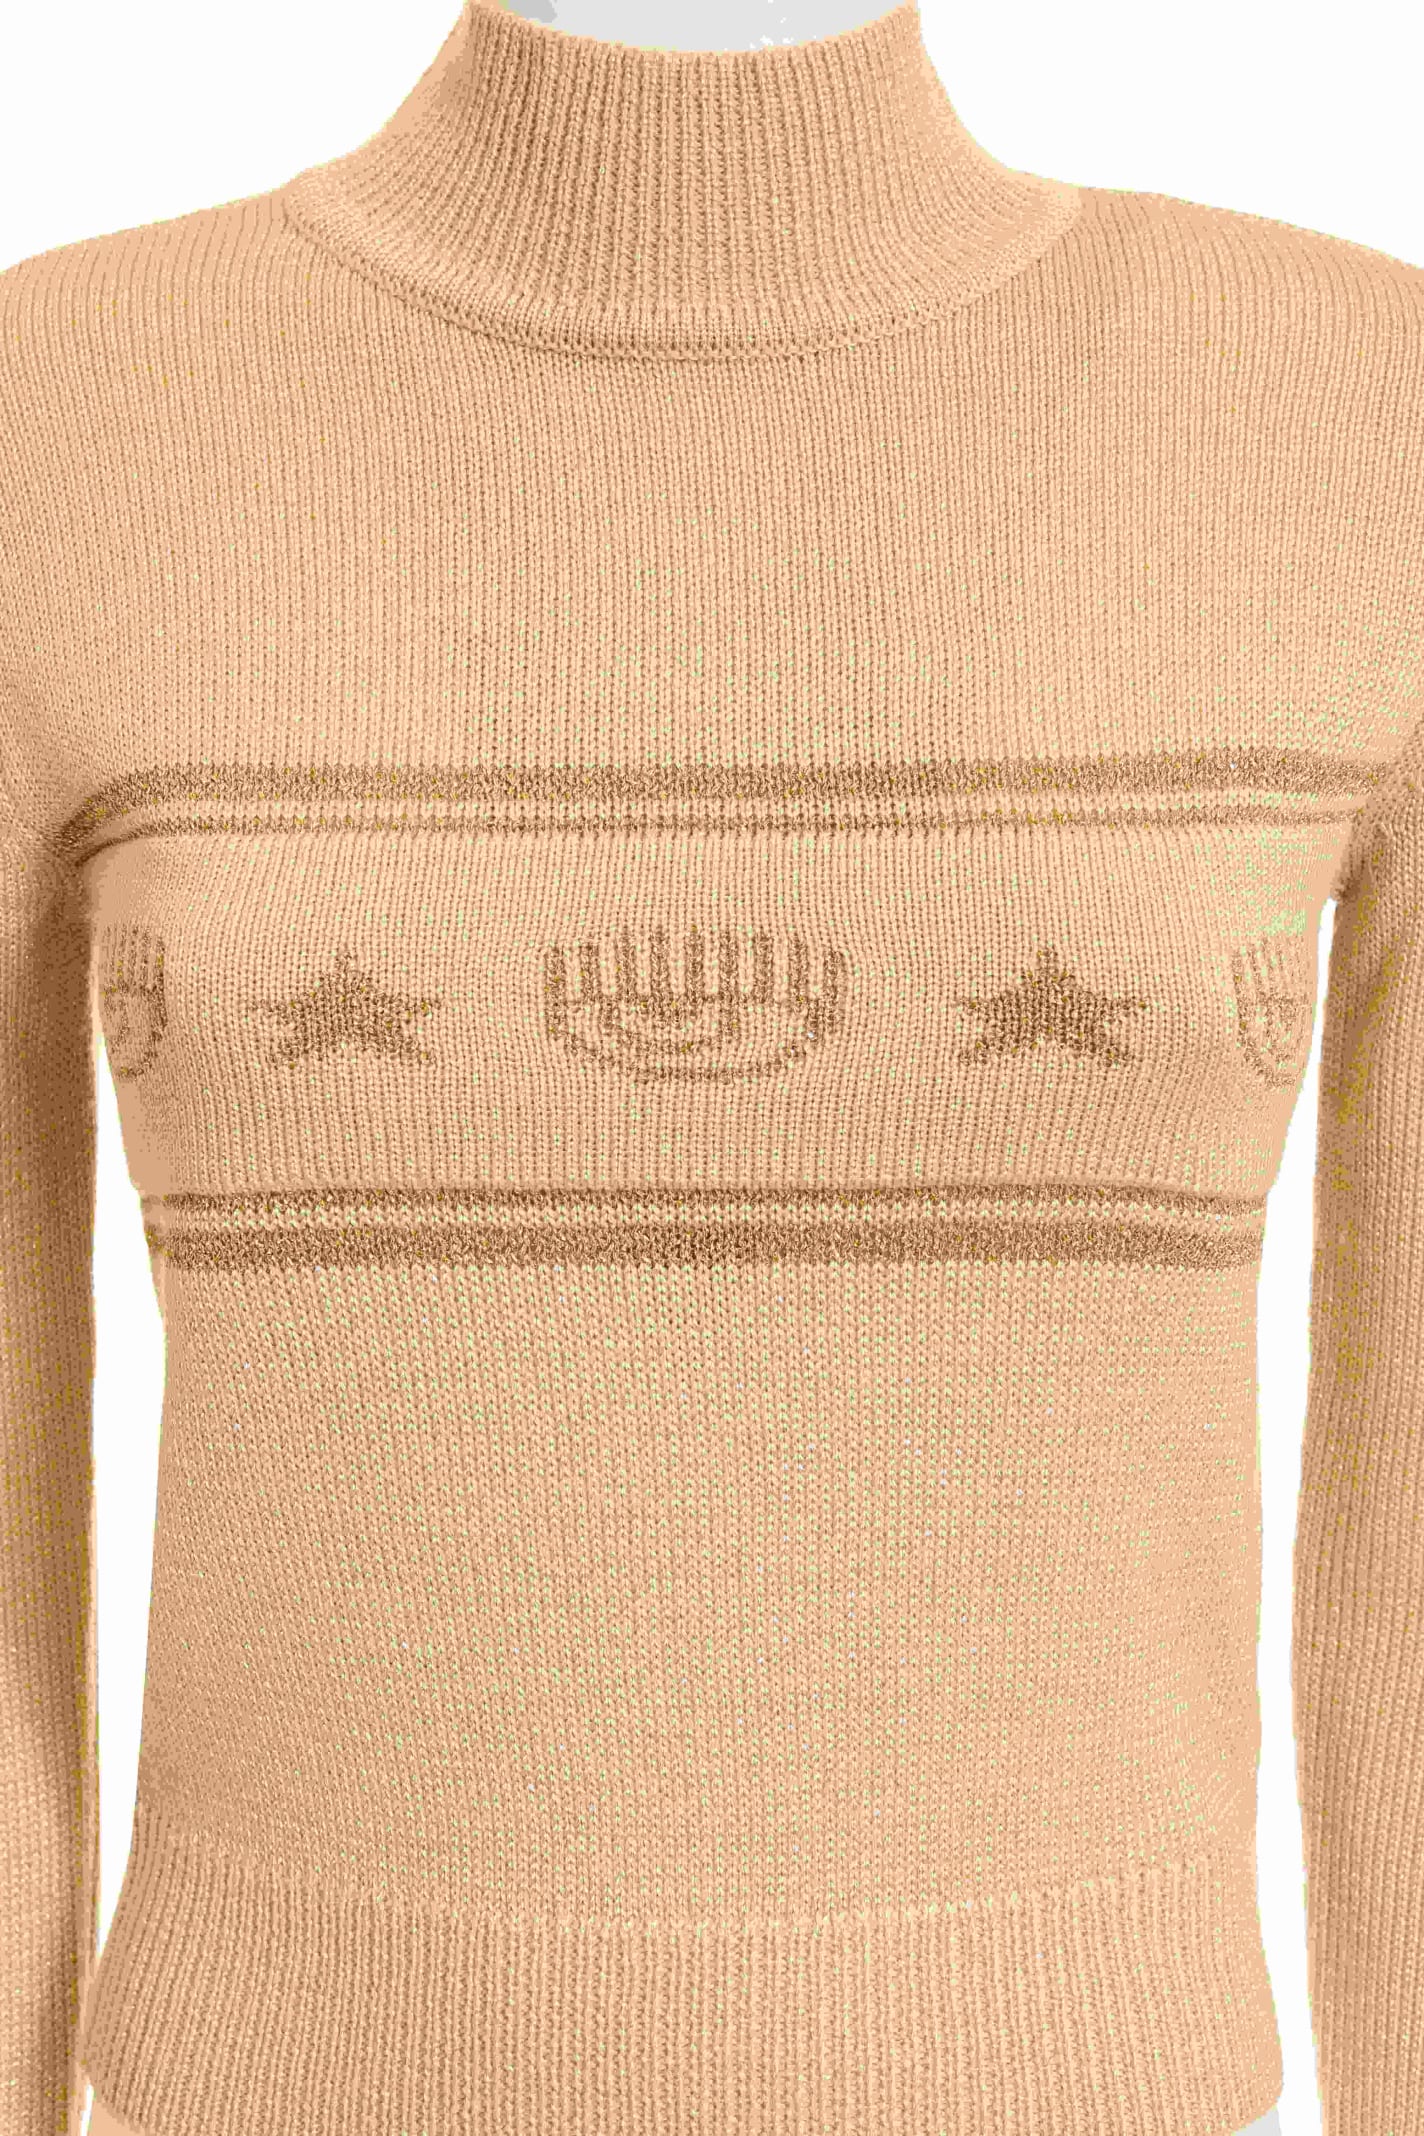 Shop Chiara Ferragni Sweaters Golden